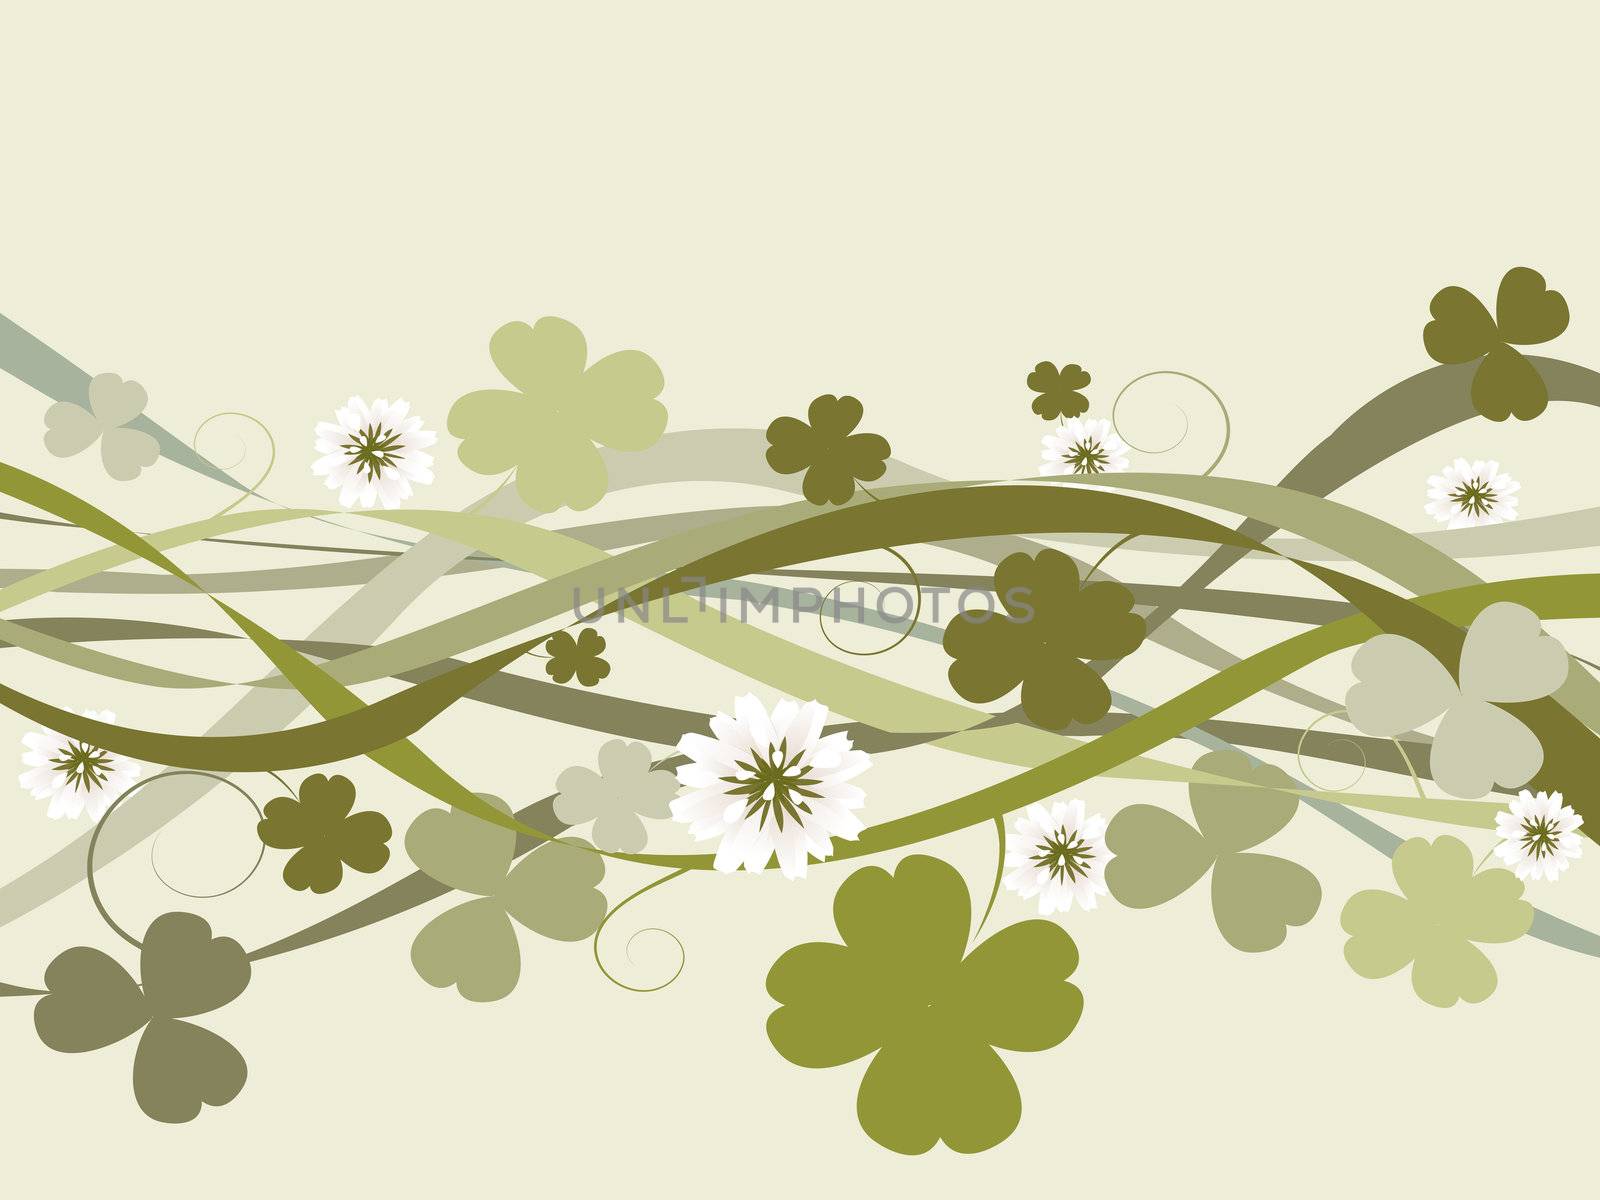 St. Patrick's Day design by Lirch